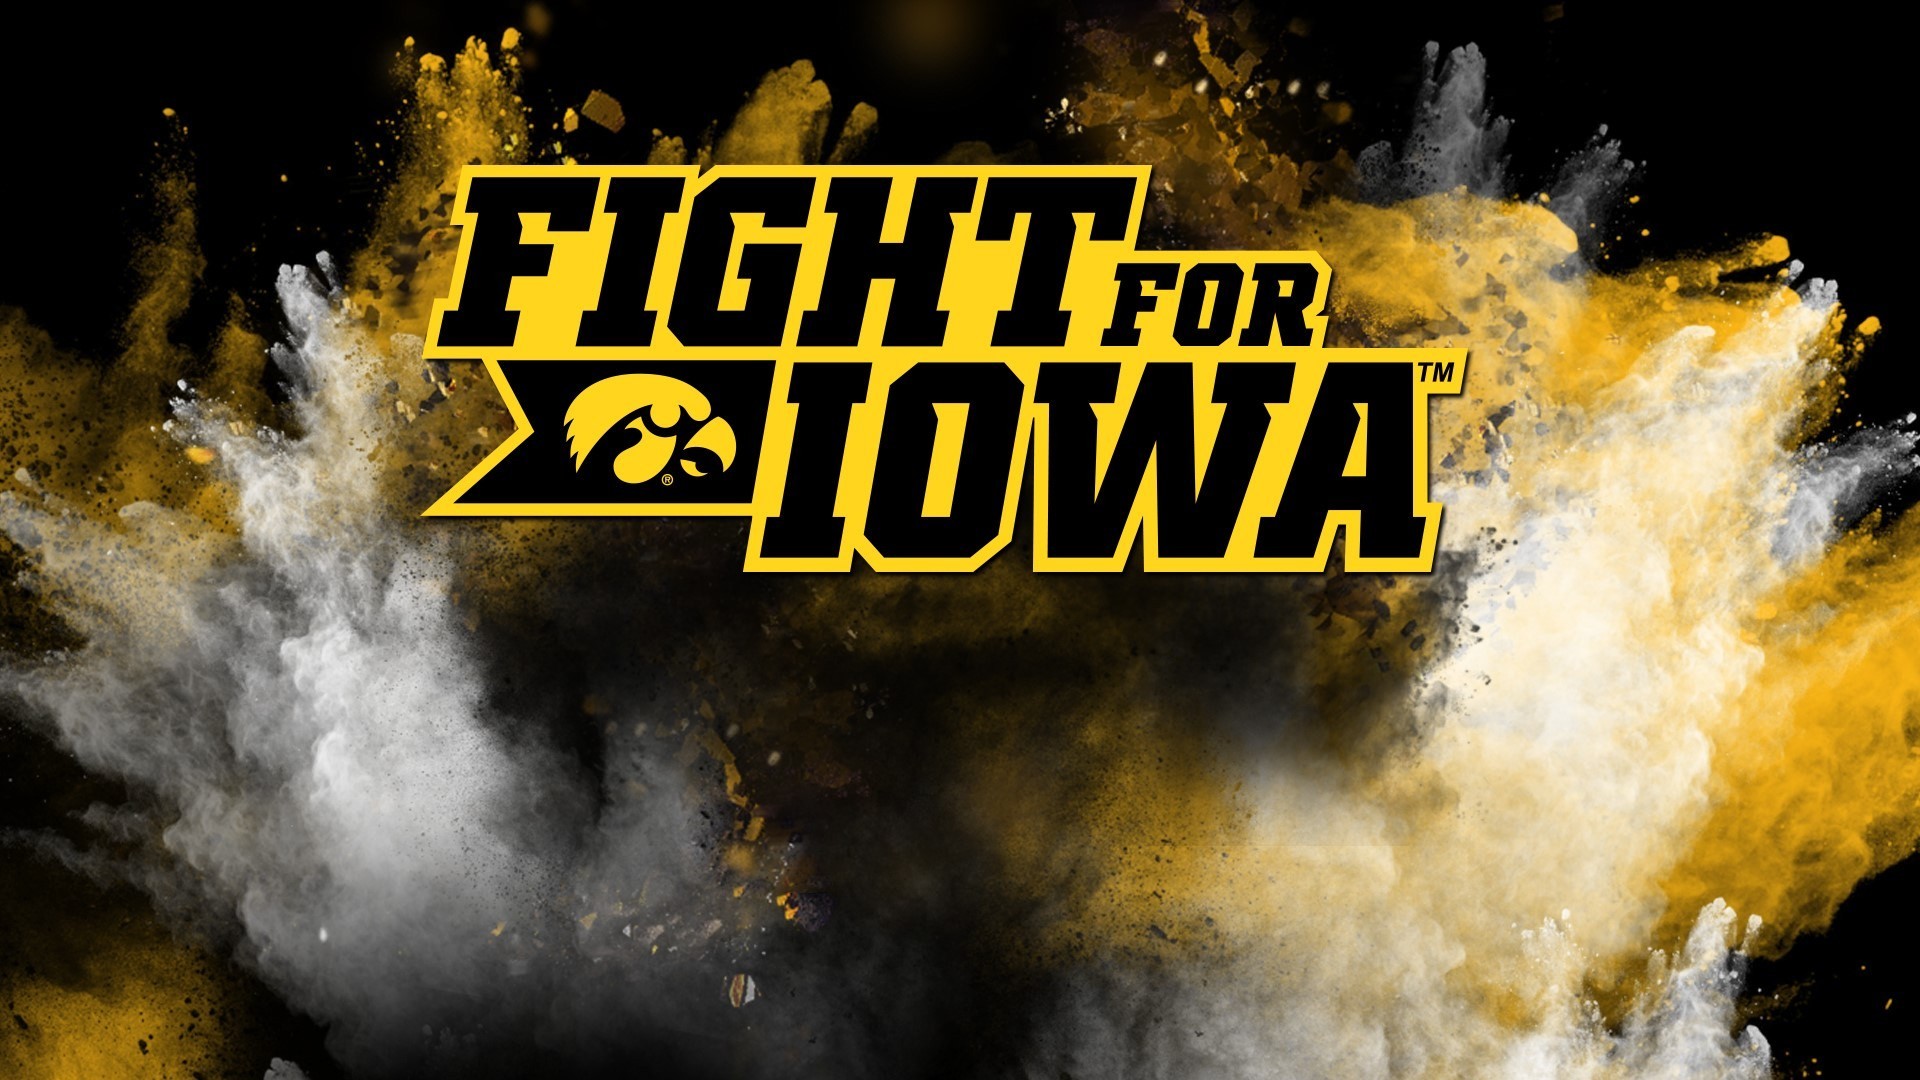 Iowa Hawkeyes Football Stadium Wallpaper Jpg Iowa Hawkeyes - Iowa Hawkeyes Fight For Iowa - HD Wallpaper 